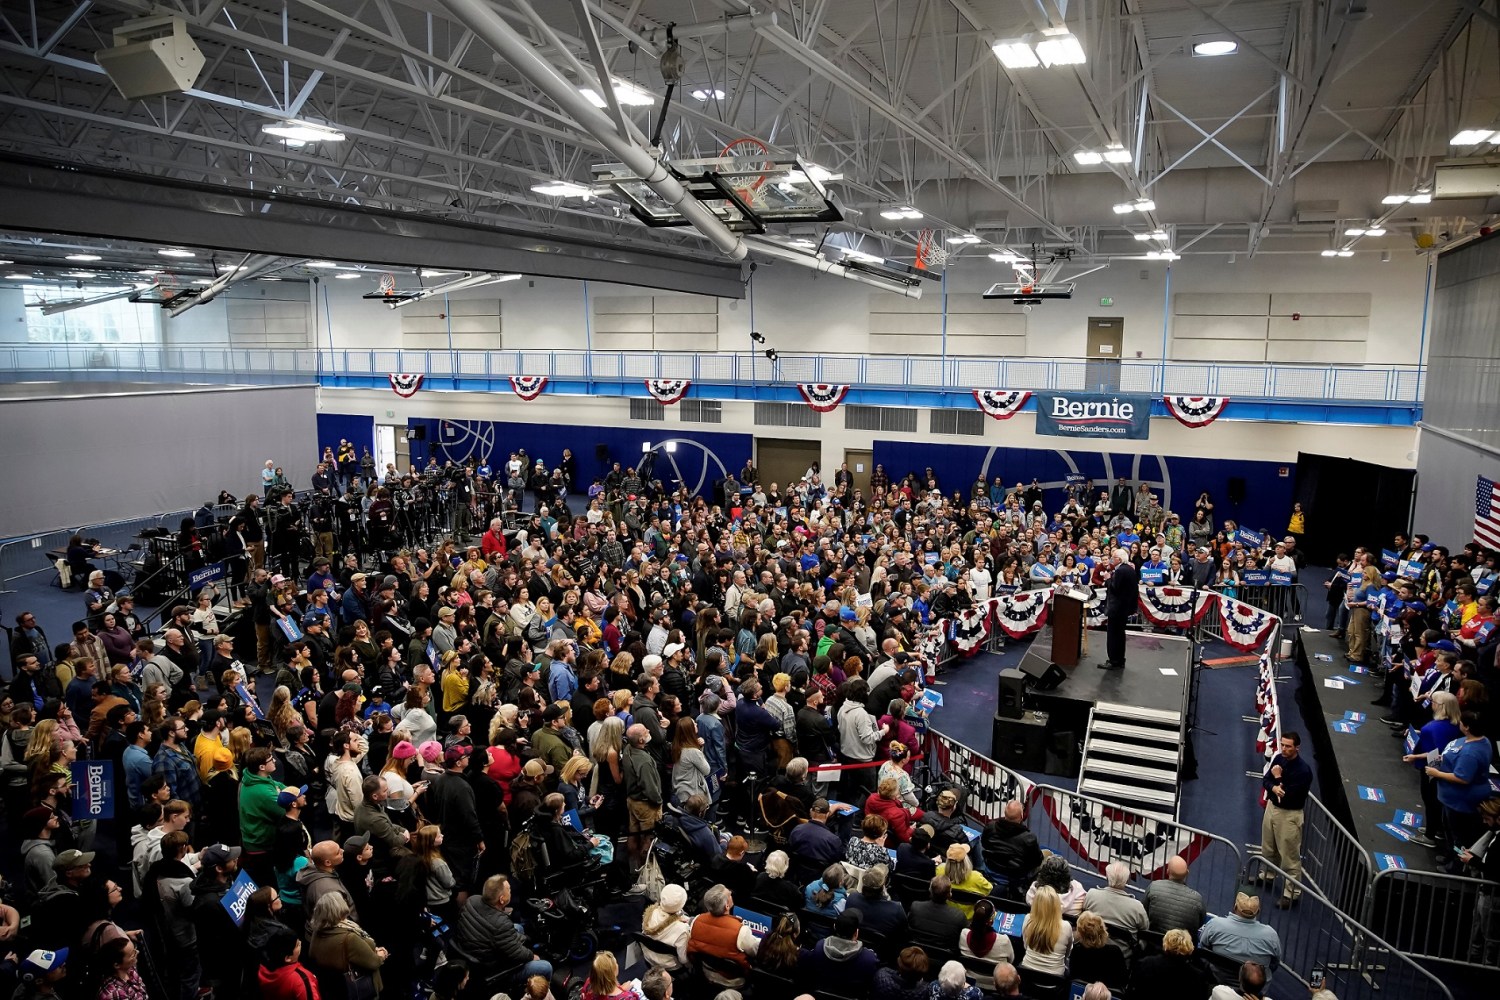 Democratic 2020 U.S. presidential candidate Senator Bernie Sanders attends a campaign event in Carson City, Nevada, U.S., February 16, 2020. REUTERS/Eric Thayer